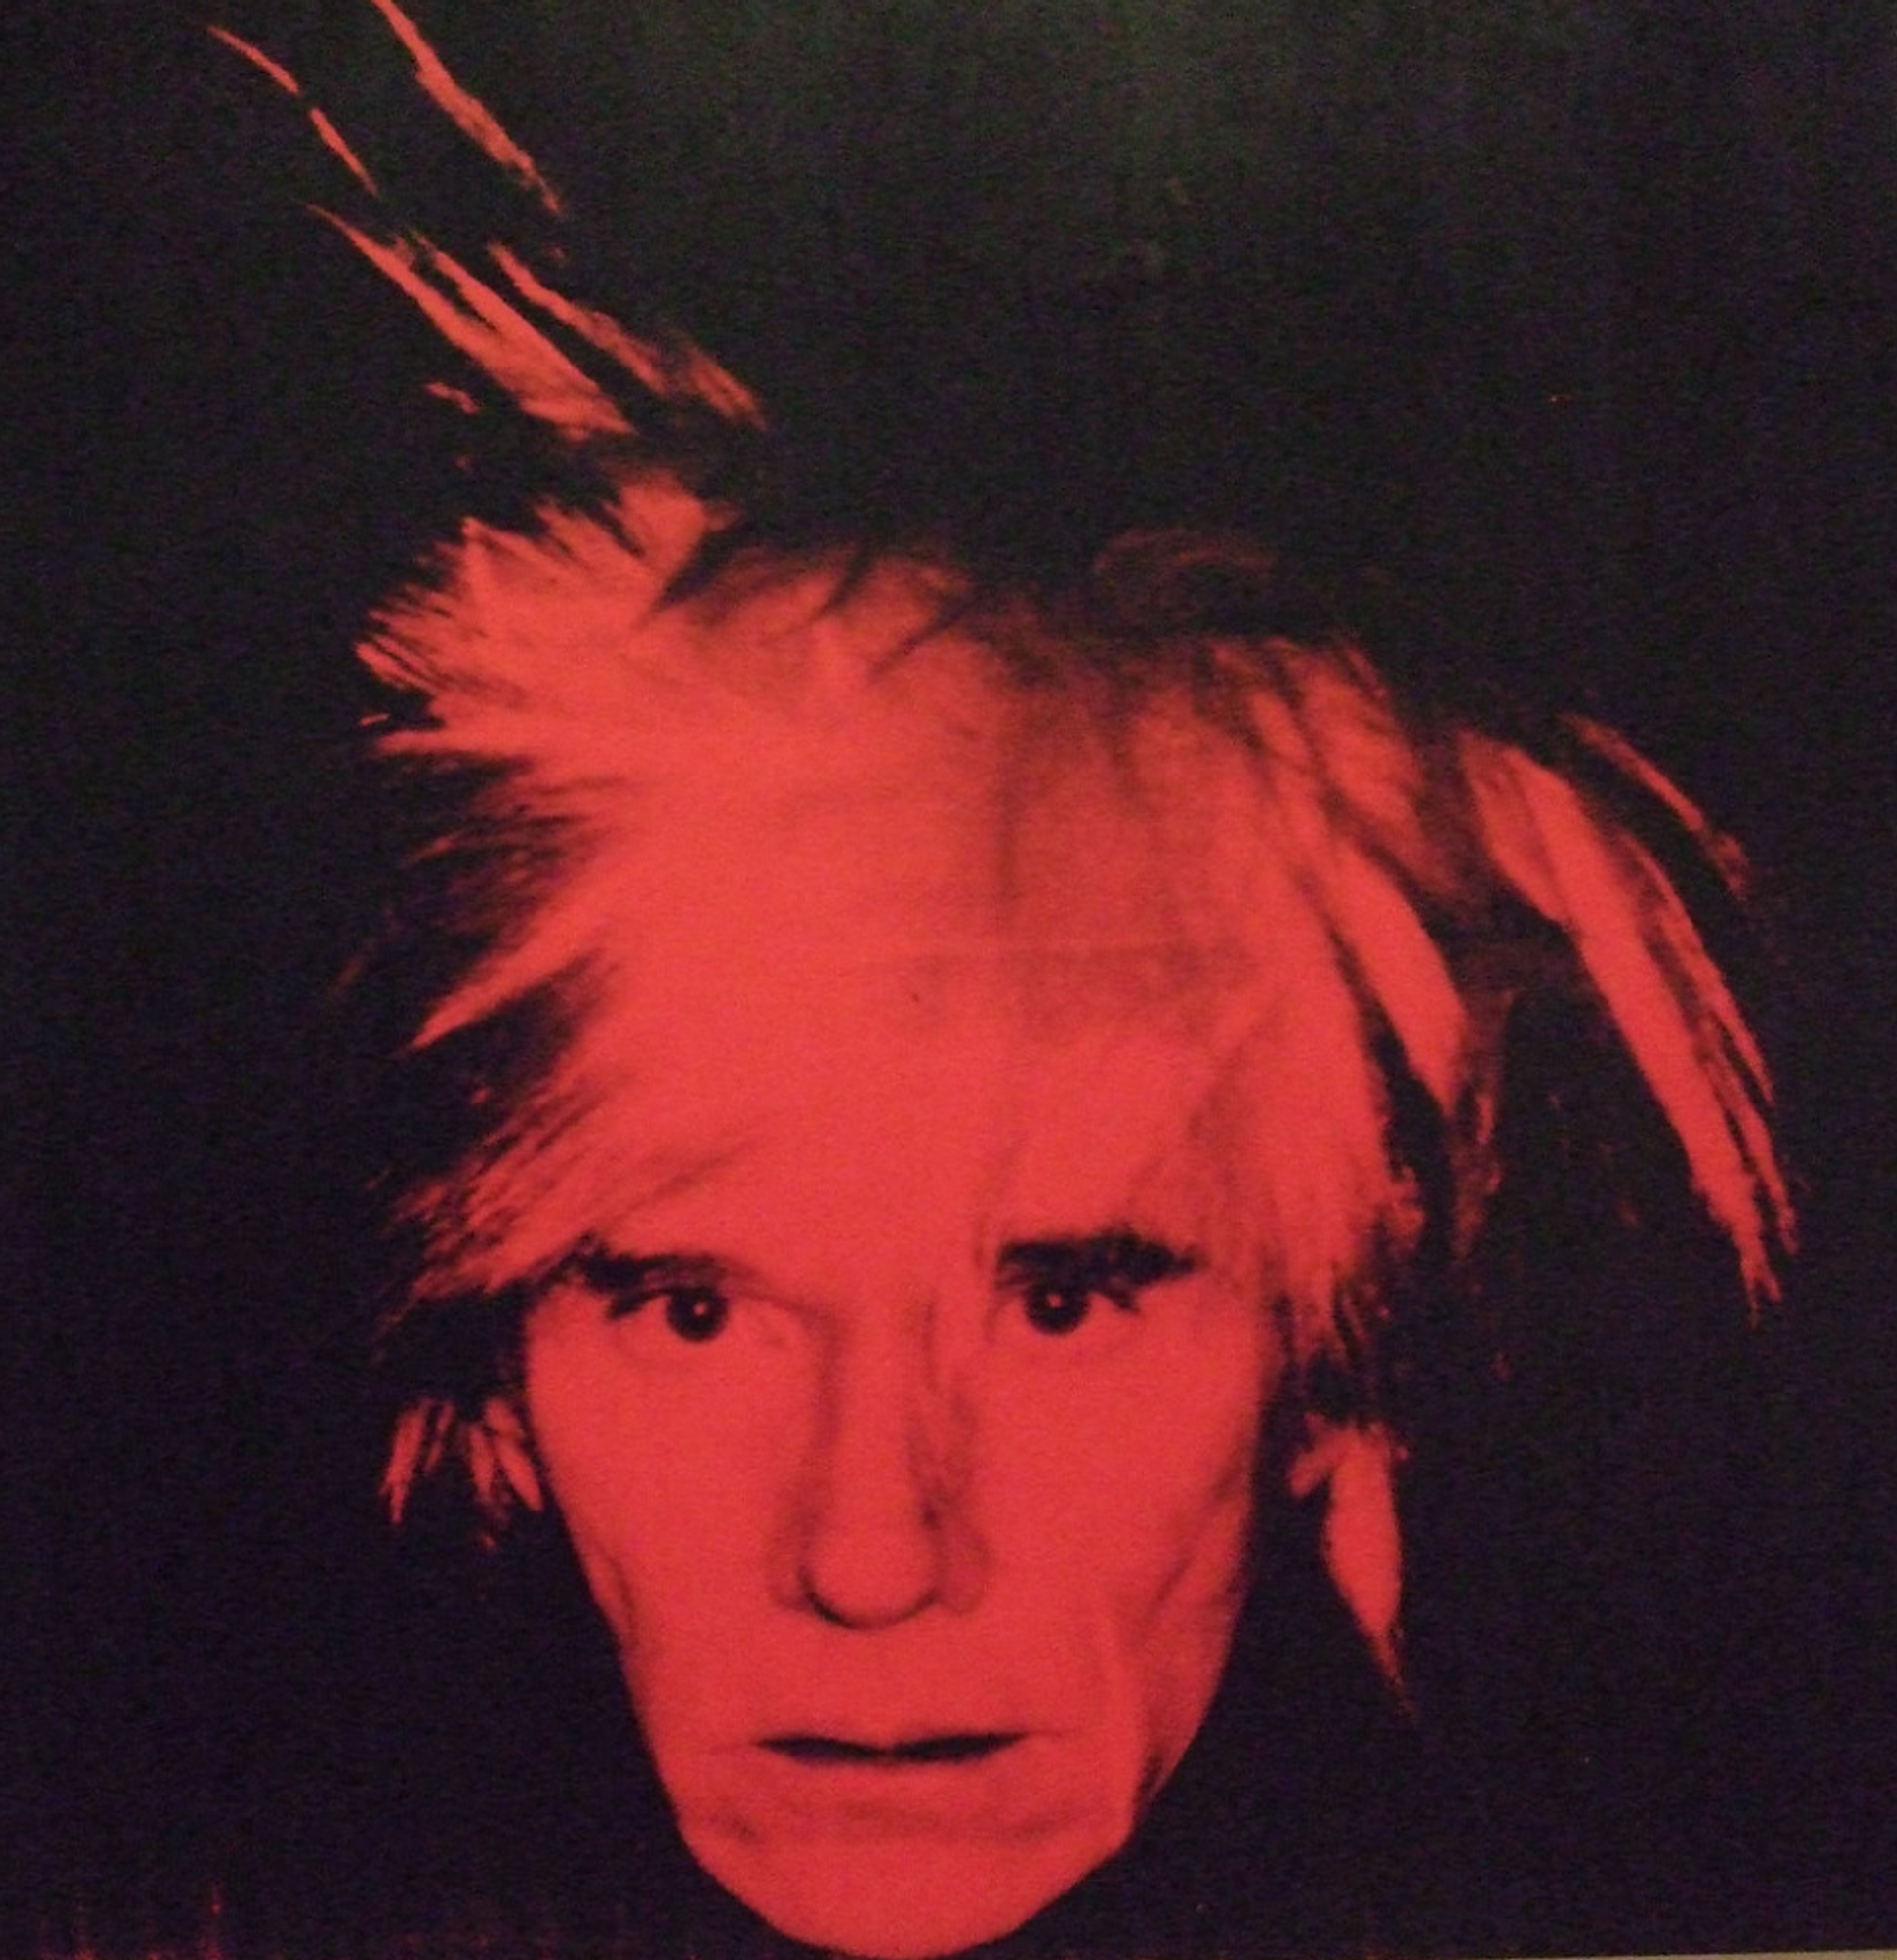 Self Portrait (Fright Wig) by Andy Warhol